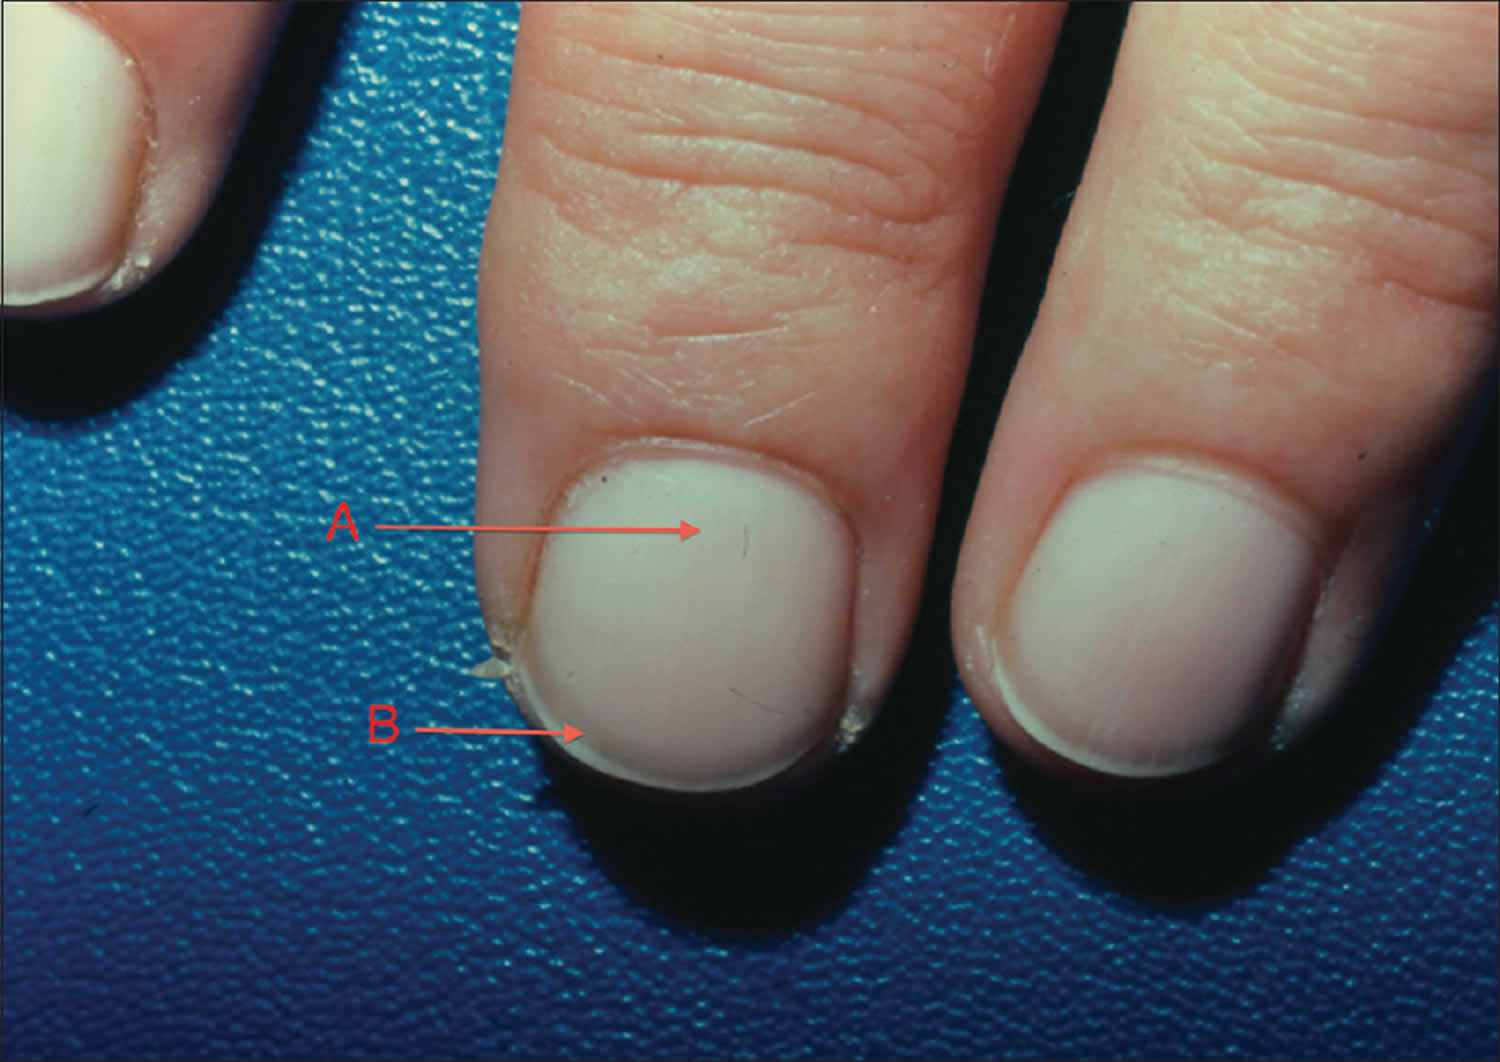 Lunula definition, lunula function & nail problems